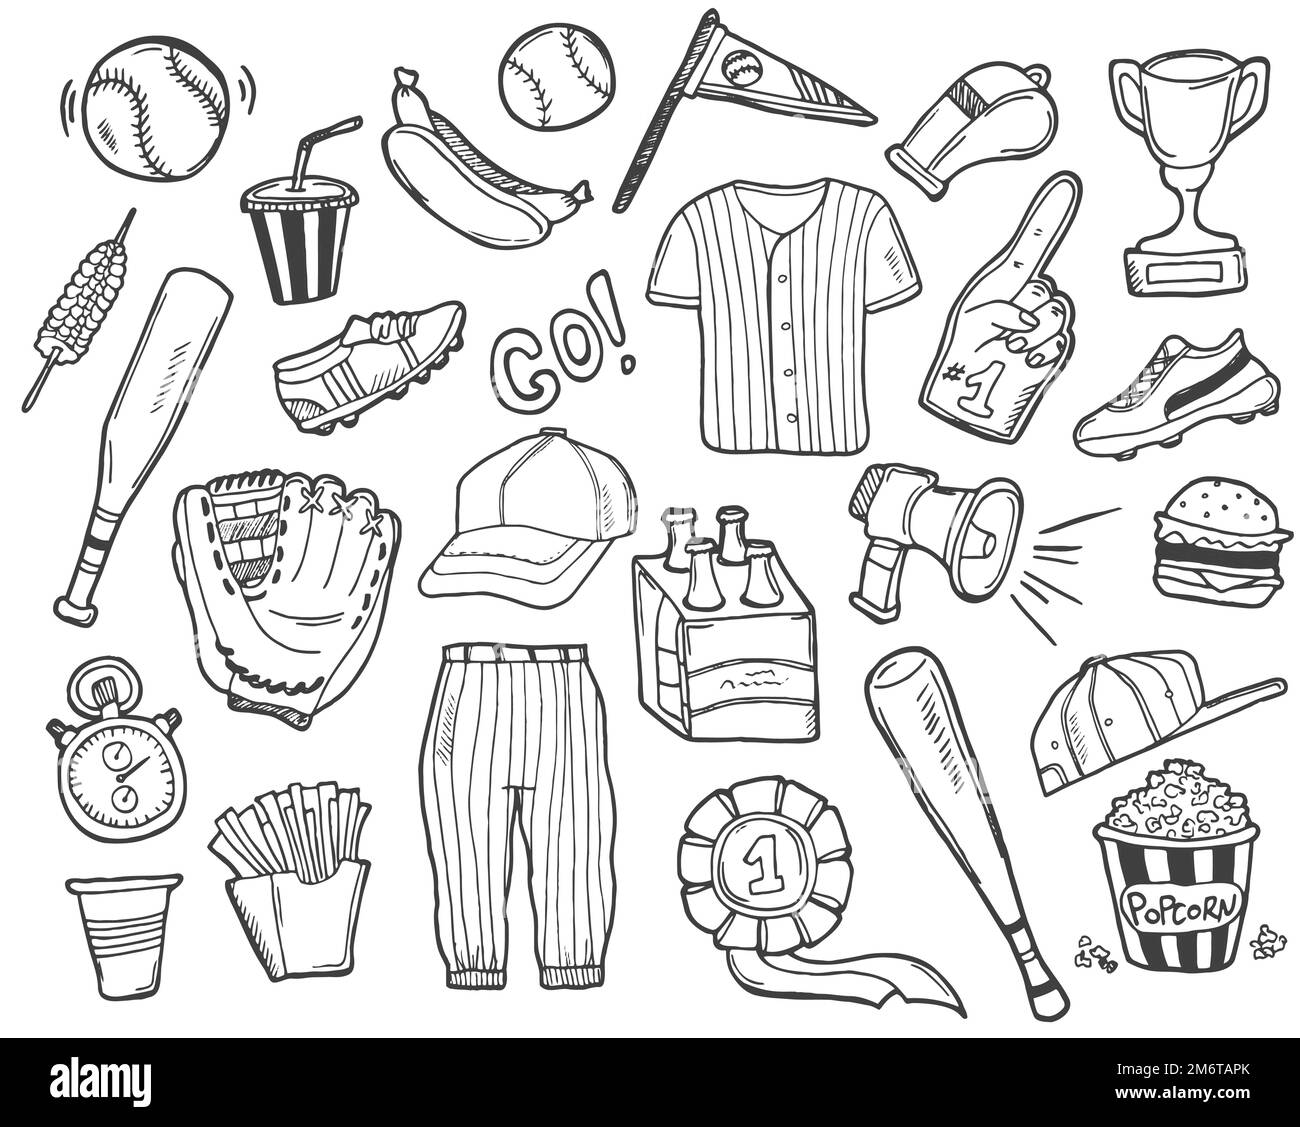 baseball cleats clip art